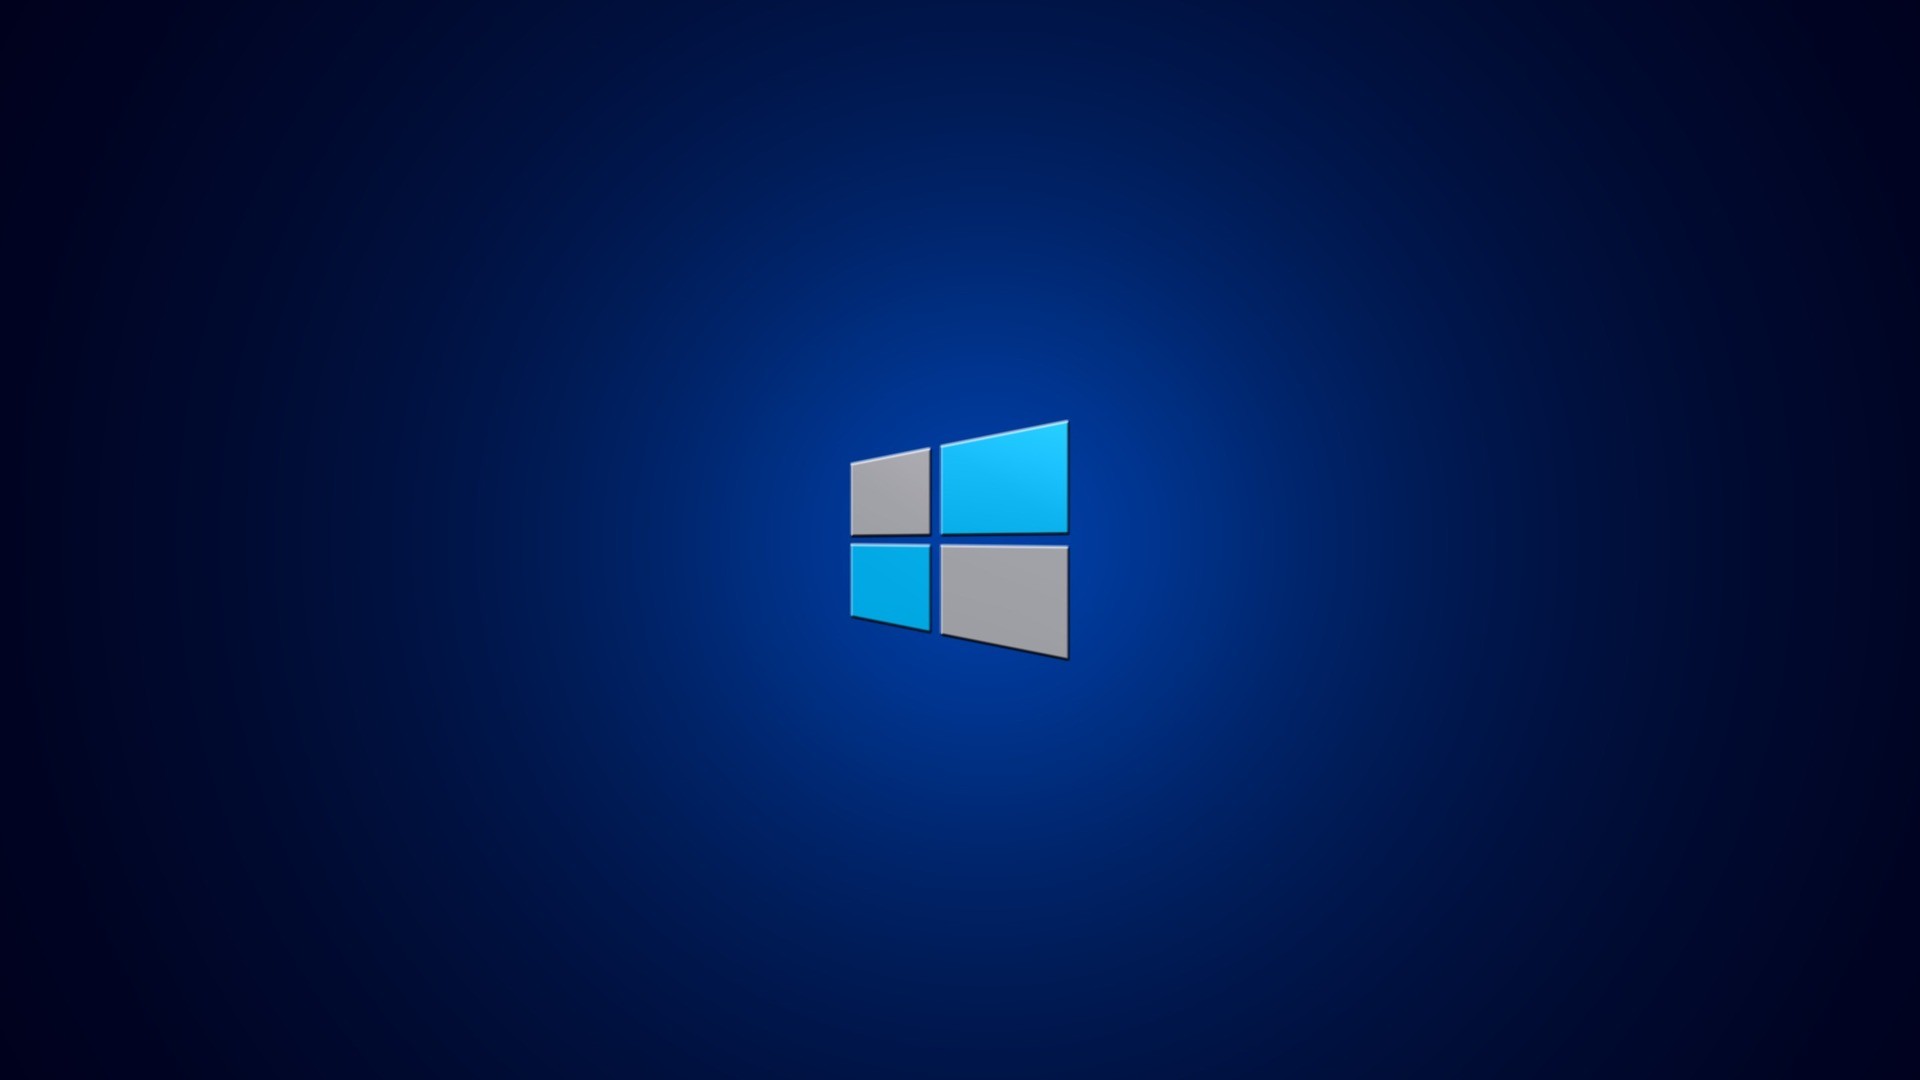 Windows 8 Wallpaper 1080p Wallpapertag Images, Photos, Reviews